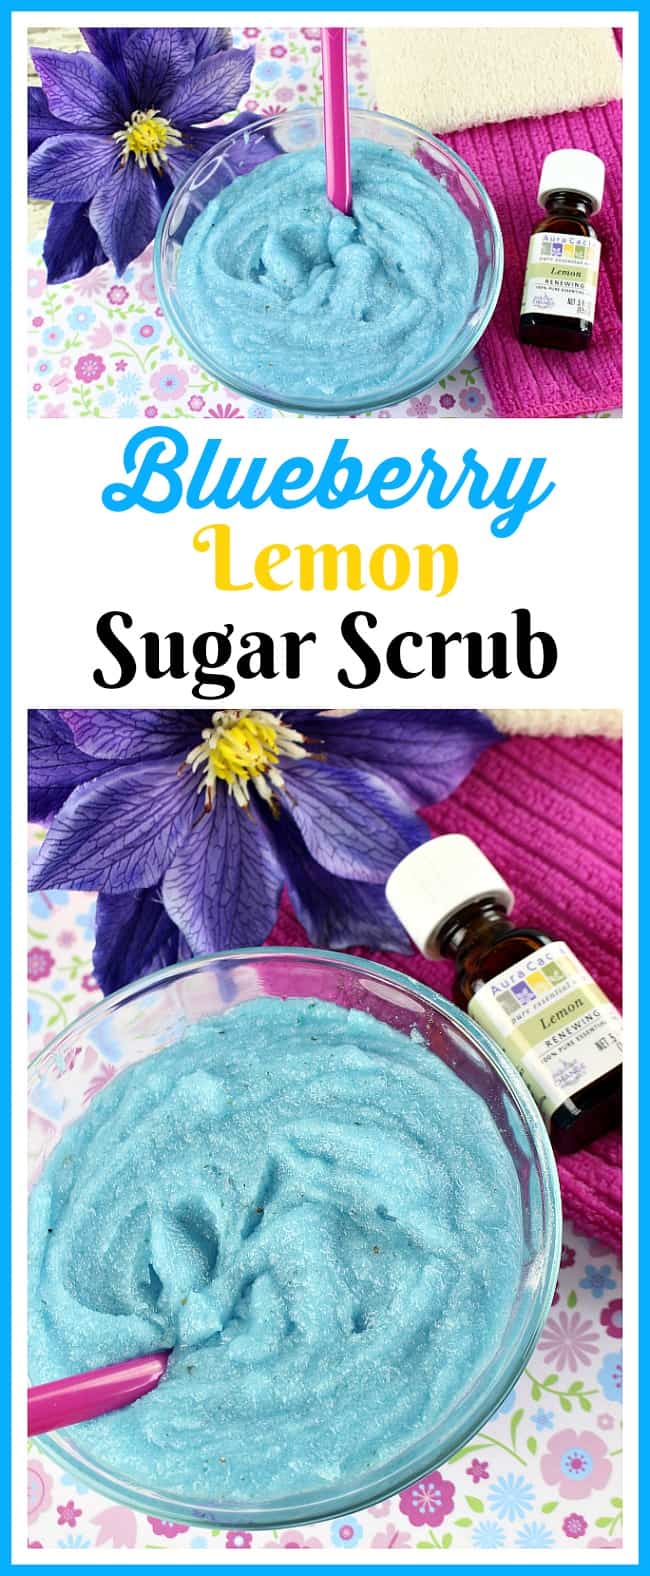 Blueberry lemon sugar scrub